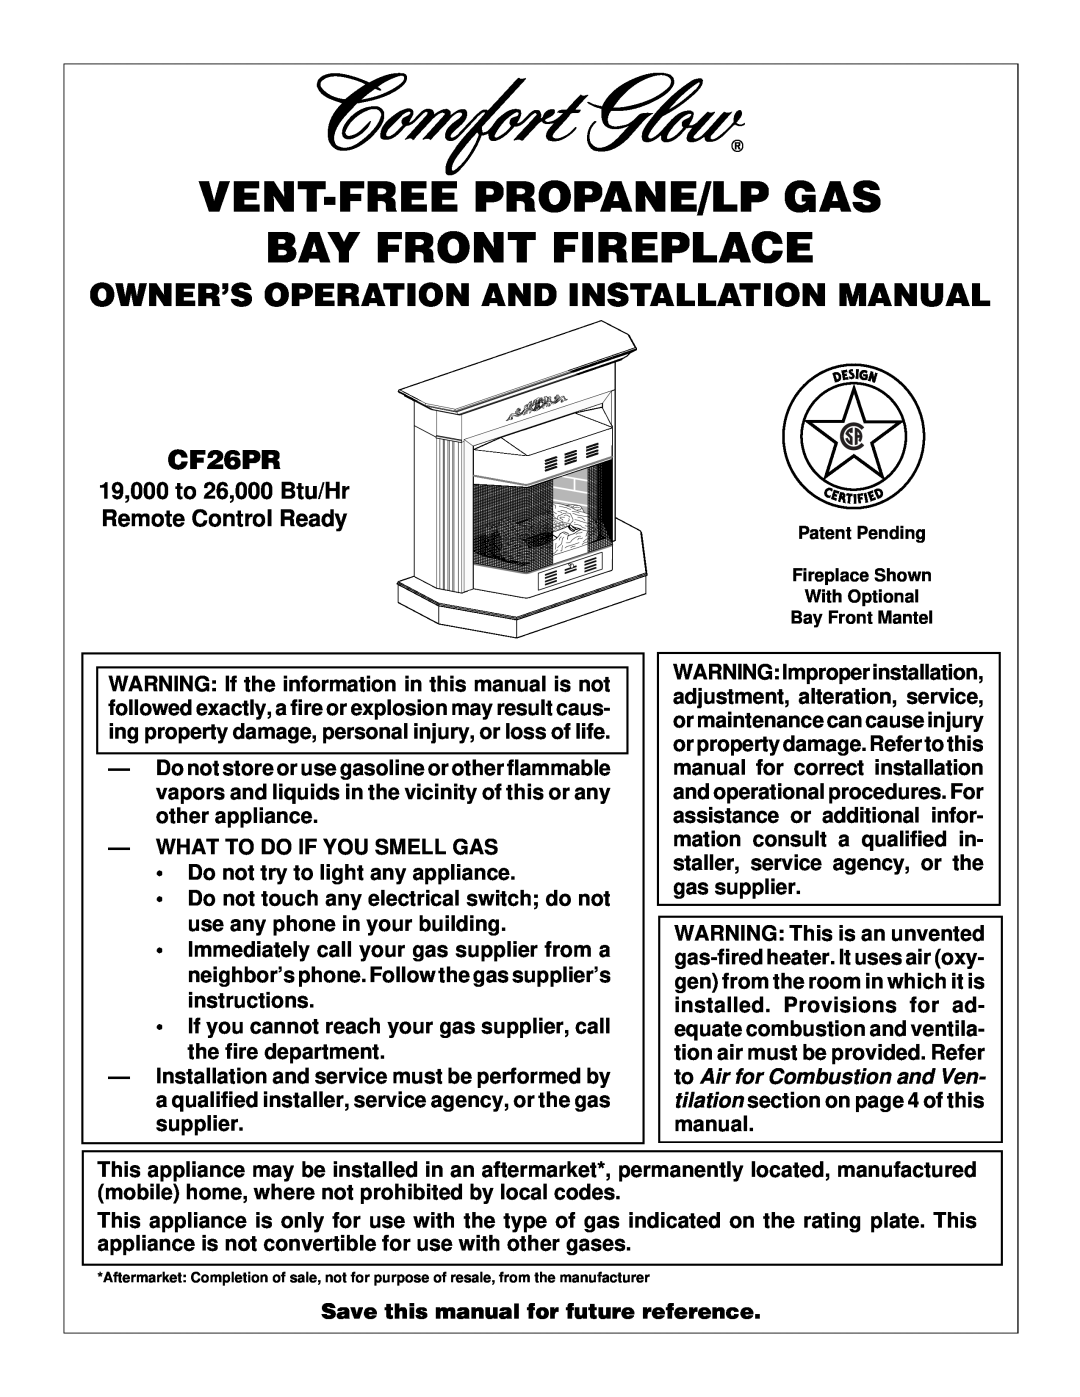 Desa CF26PR installation manual Owner’S Operation And Installation Manual, What To Do If You Smell Gas 